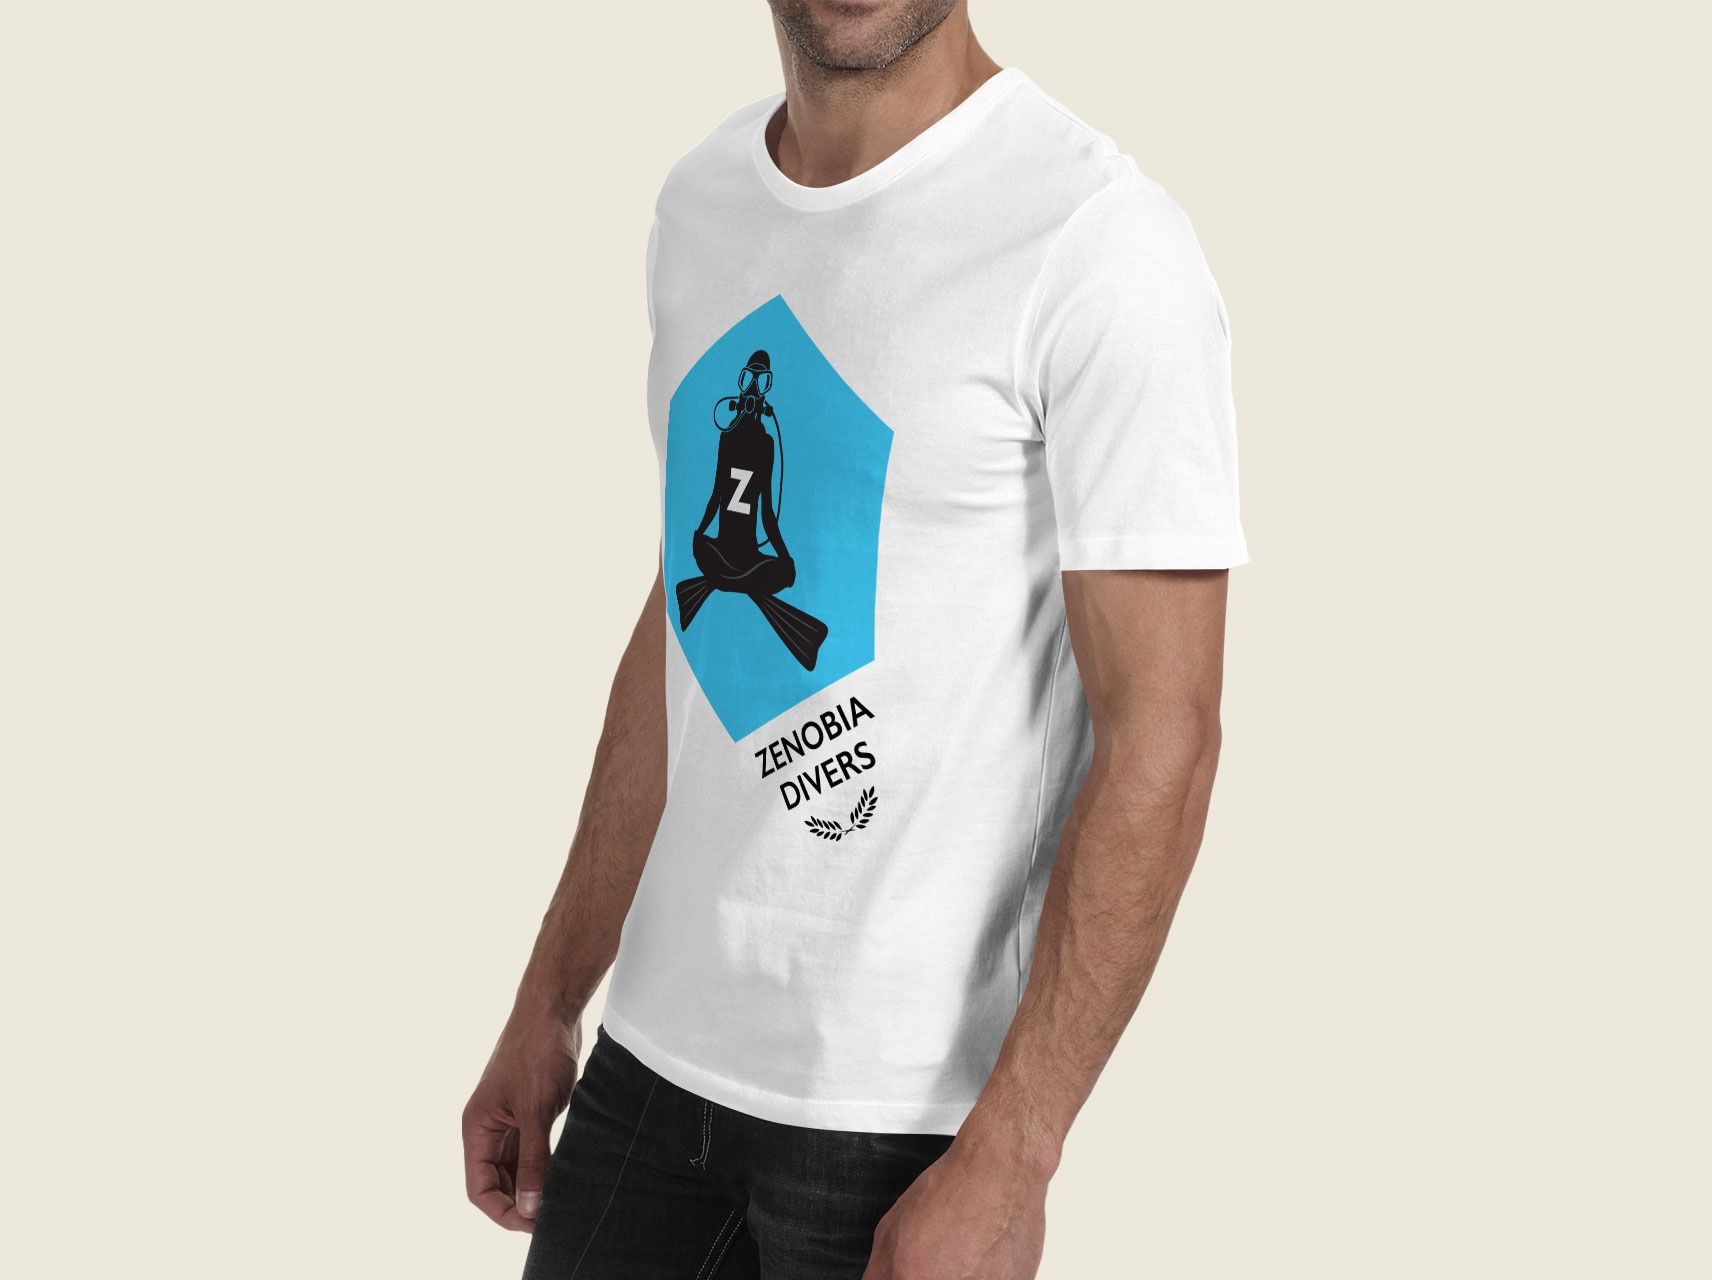 Zenobia Divers T-shirt